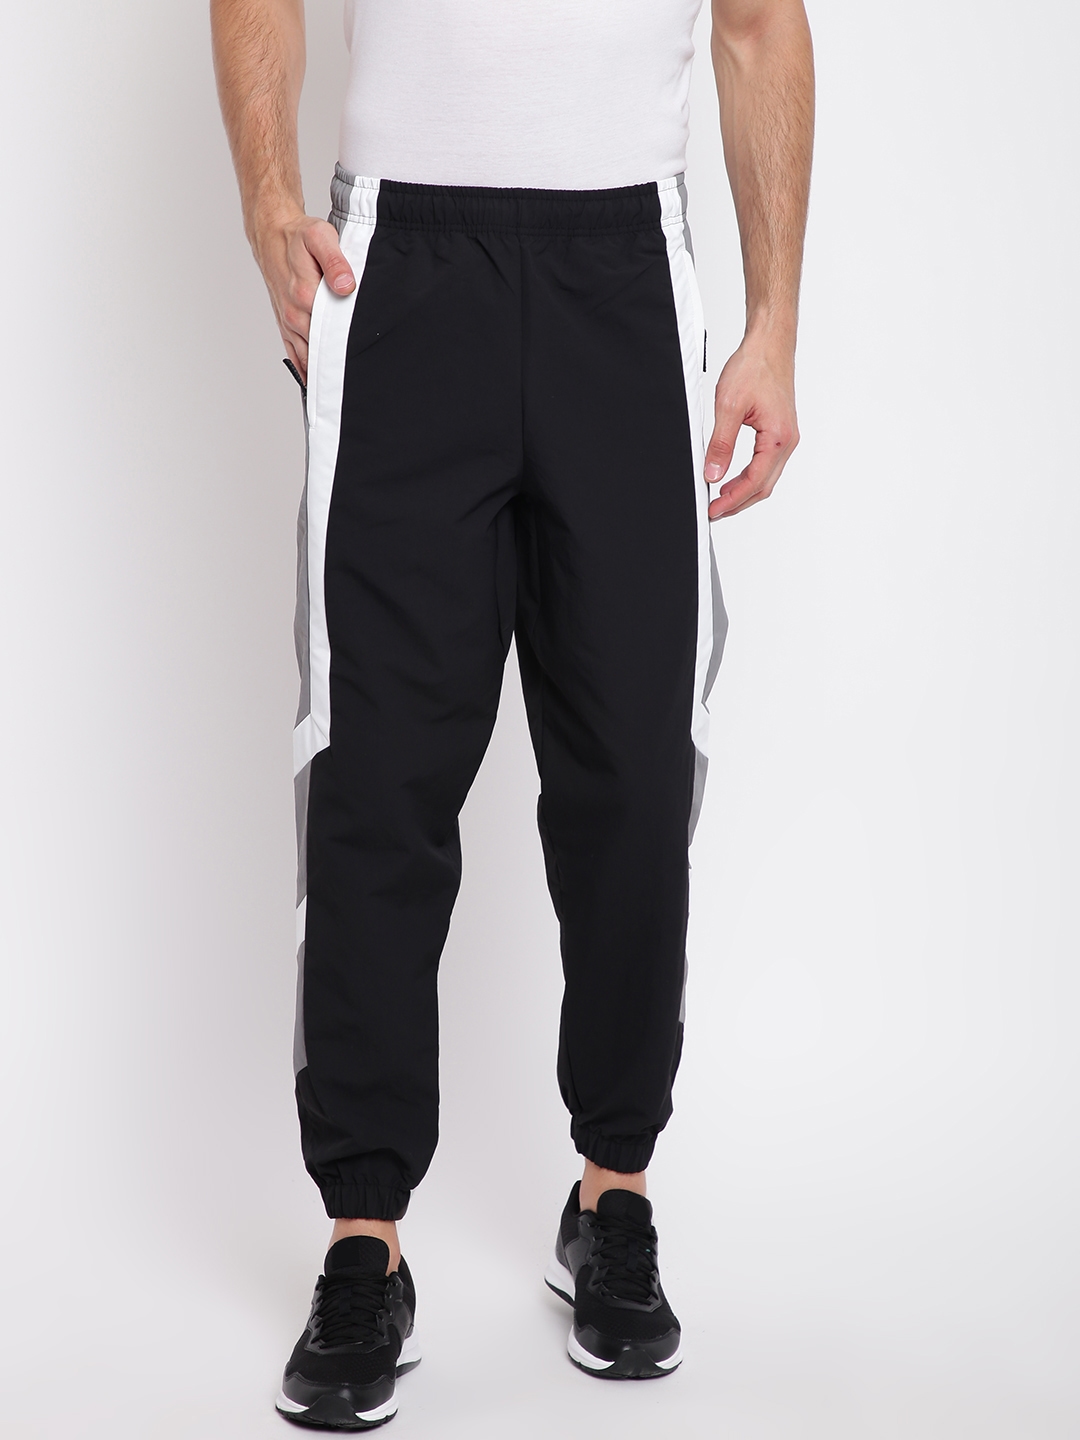 adidas Originals Men S HBE Wind Track Pants Small Black  Amazonin  Clothing  Accessories